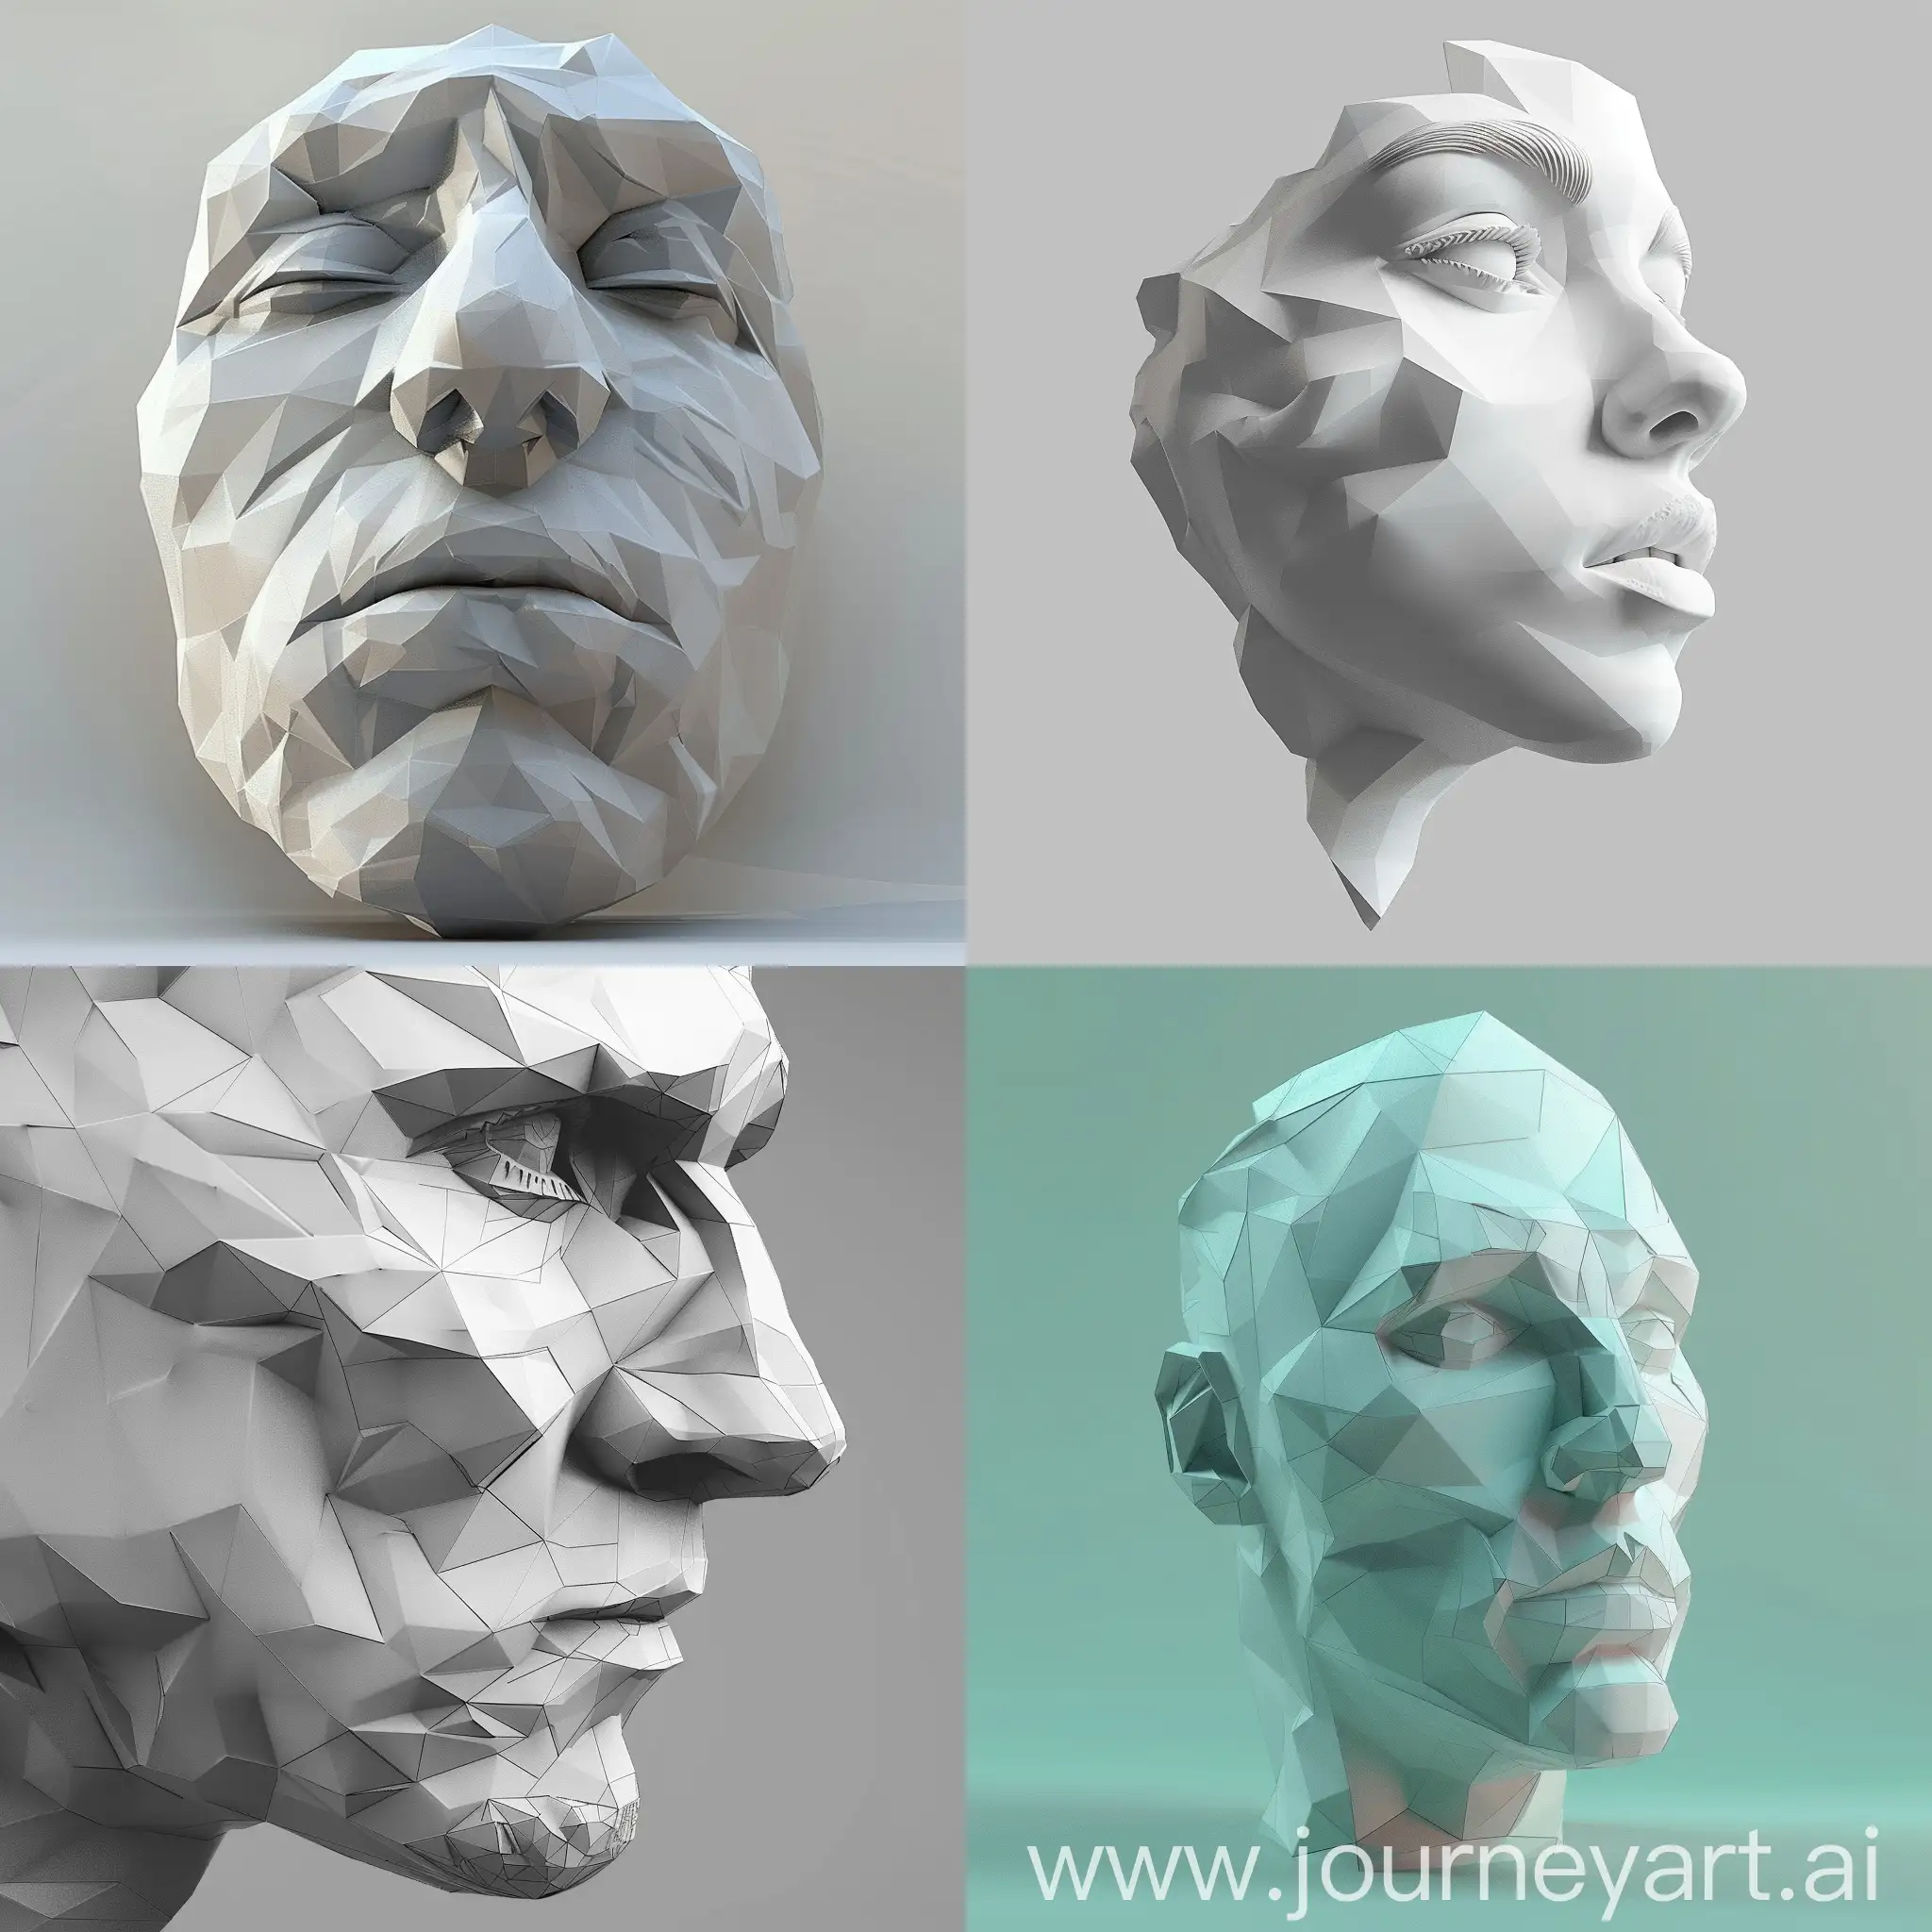 Minimalist-3D-Human-Face-Model-Sculpture